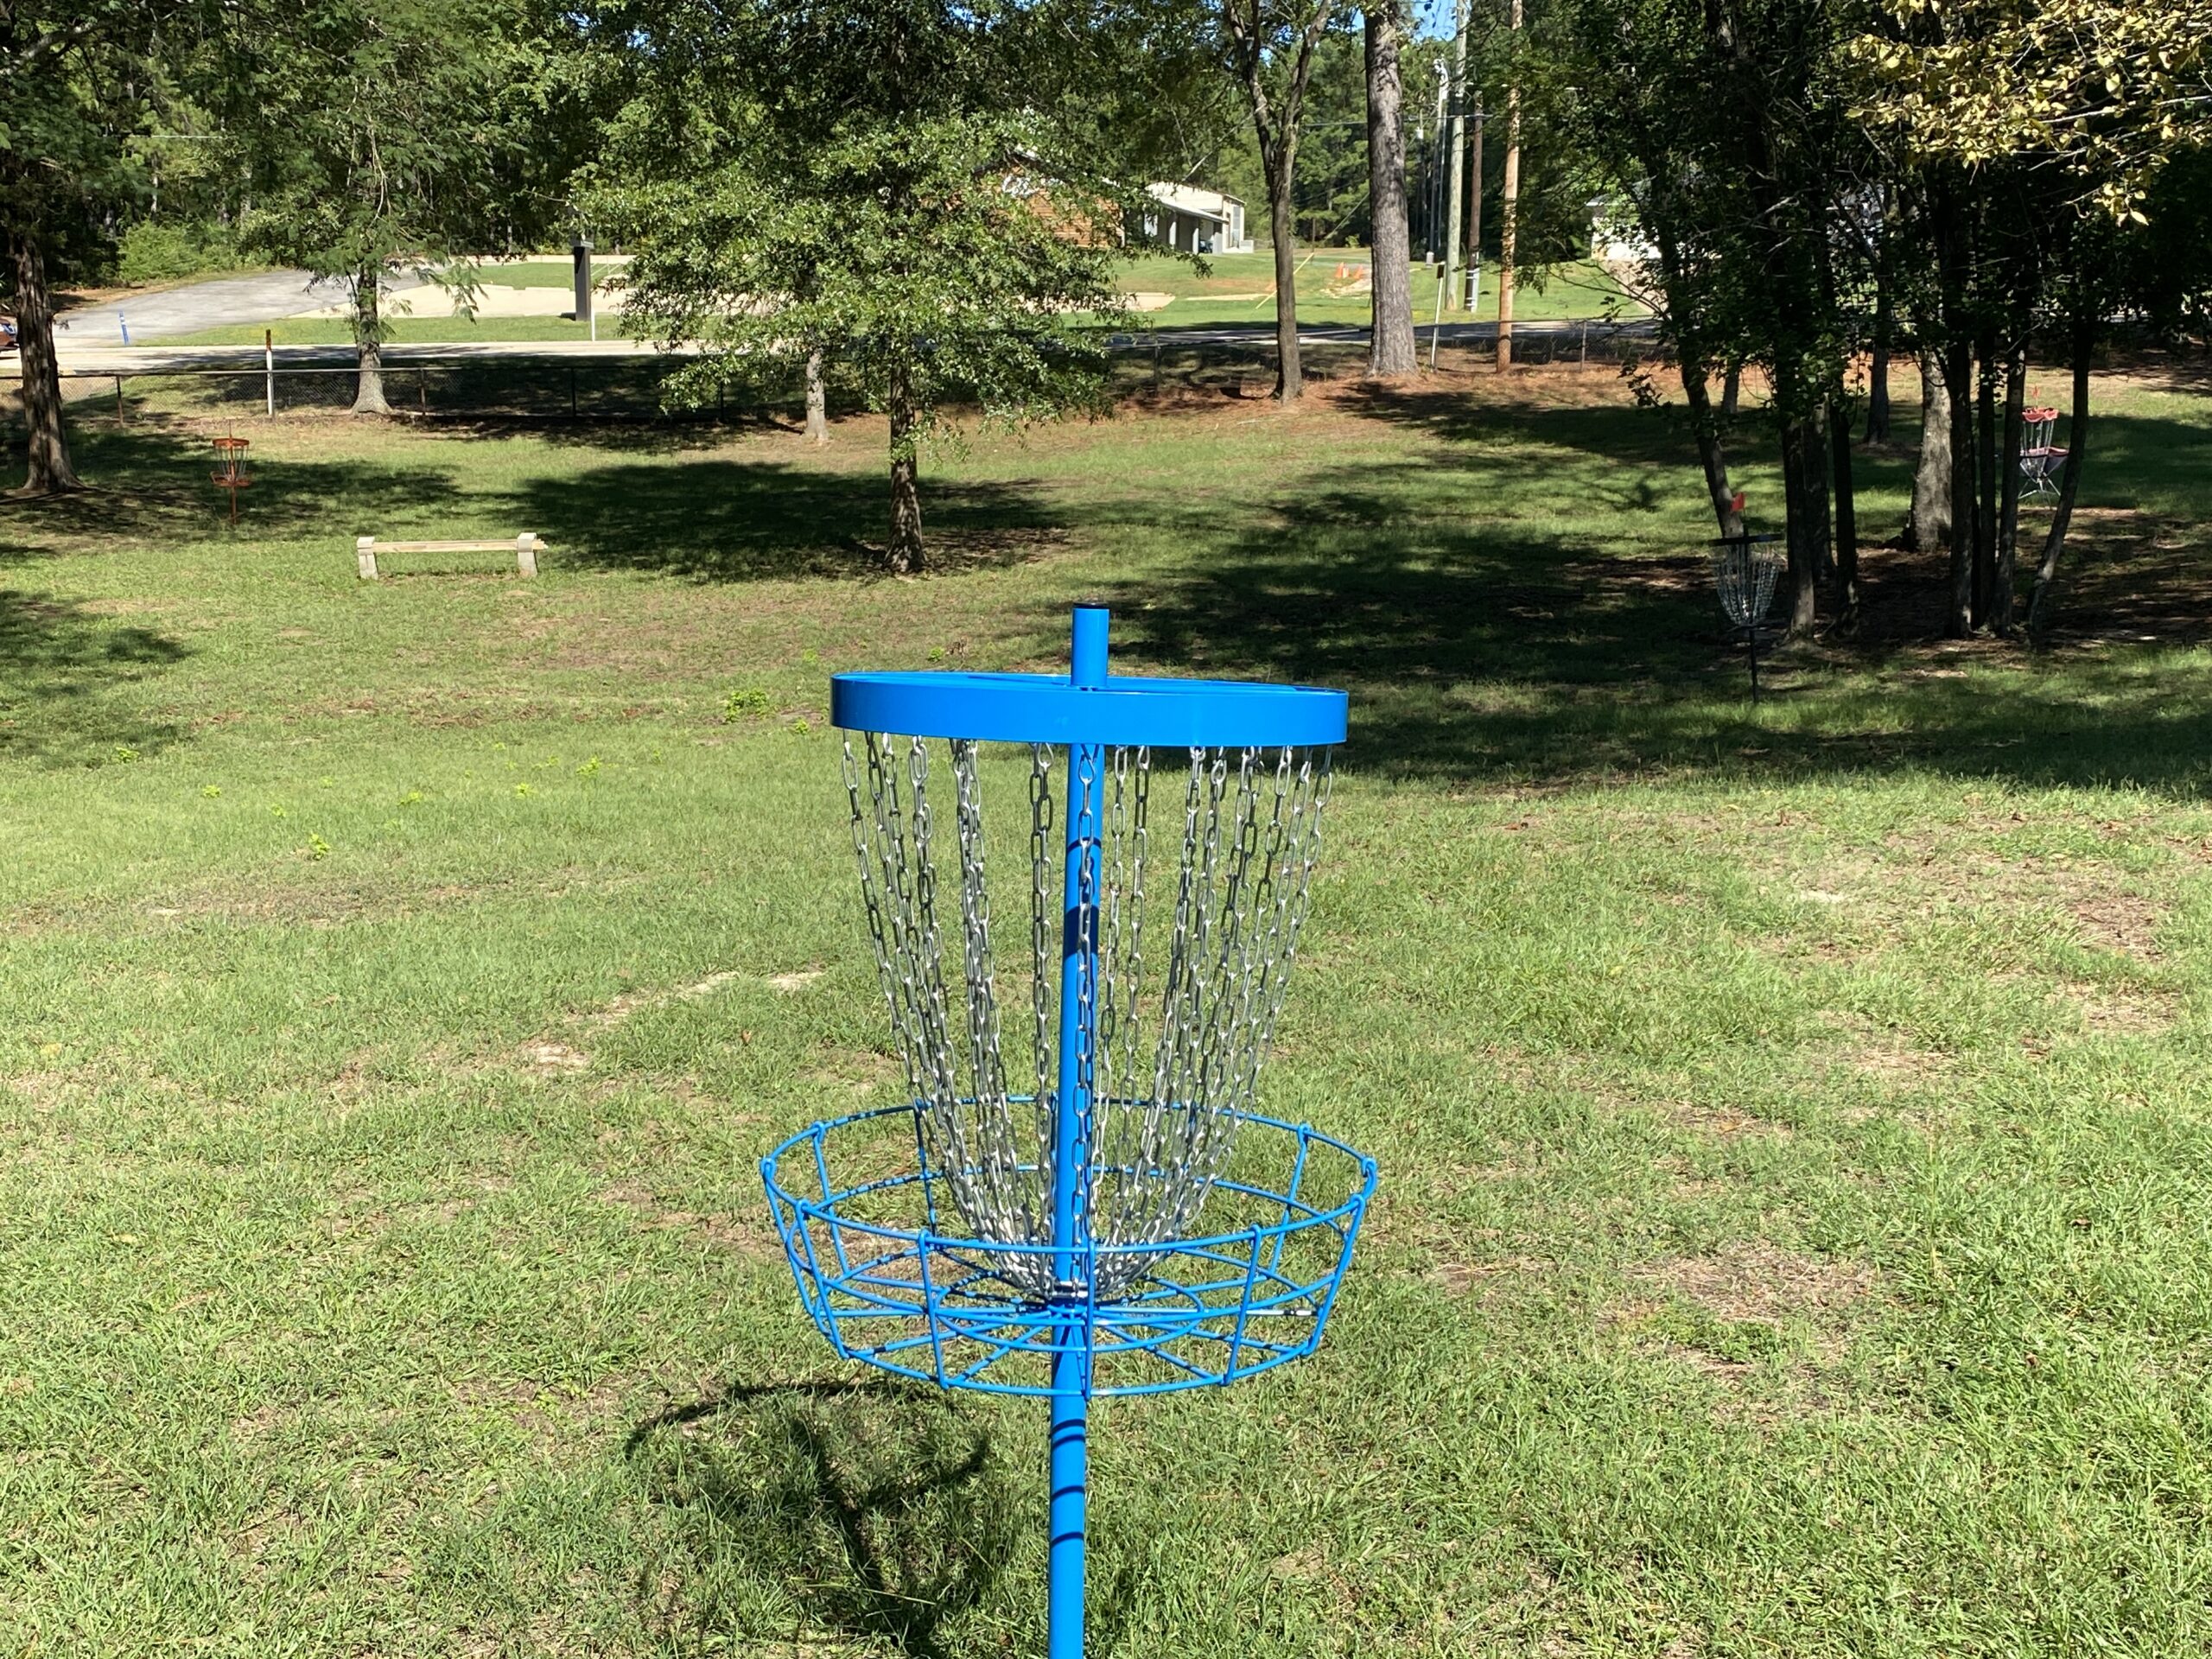 Frisbee Golf